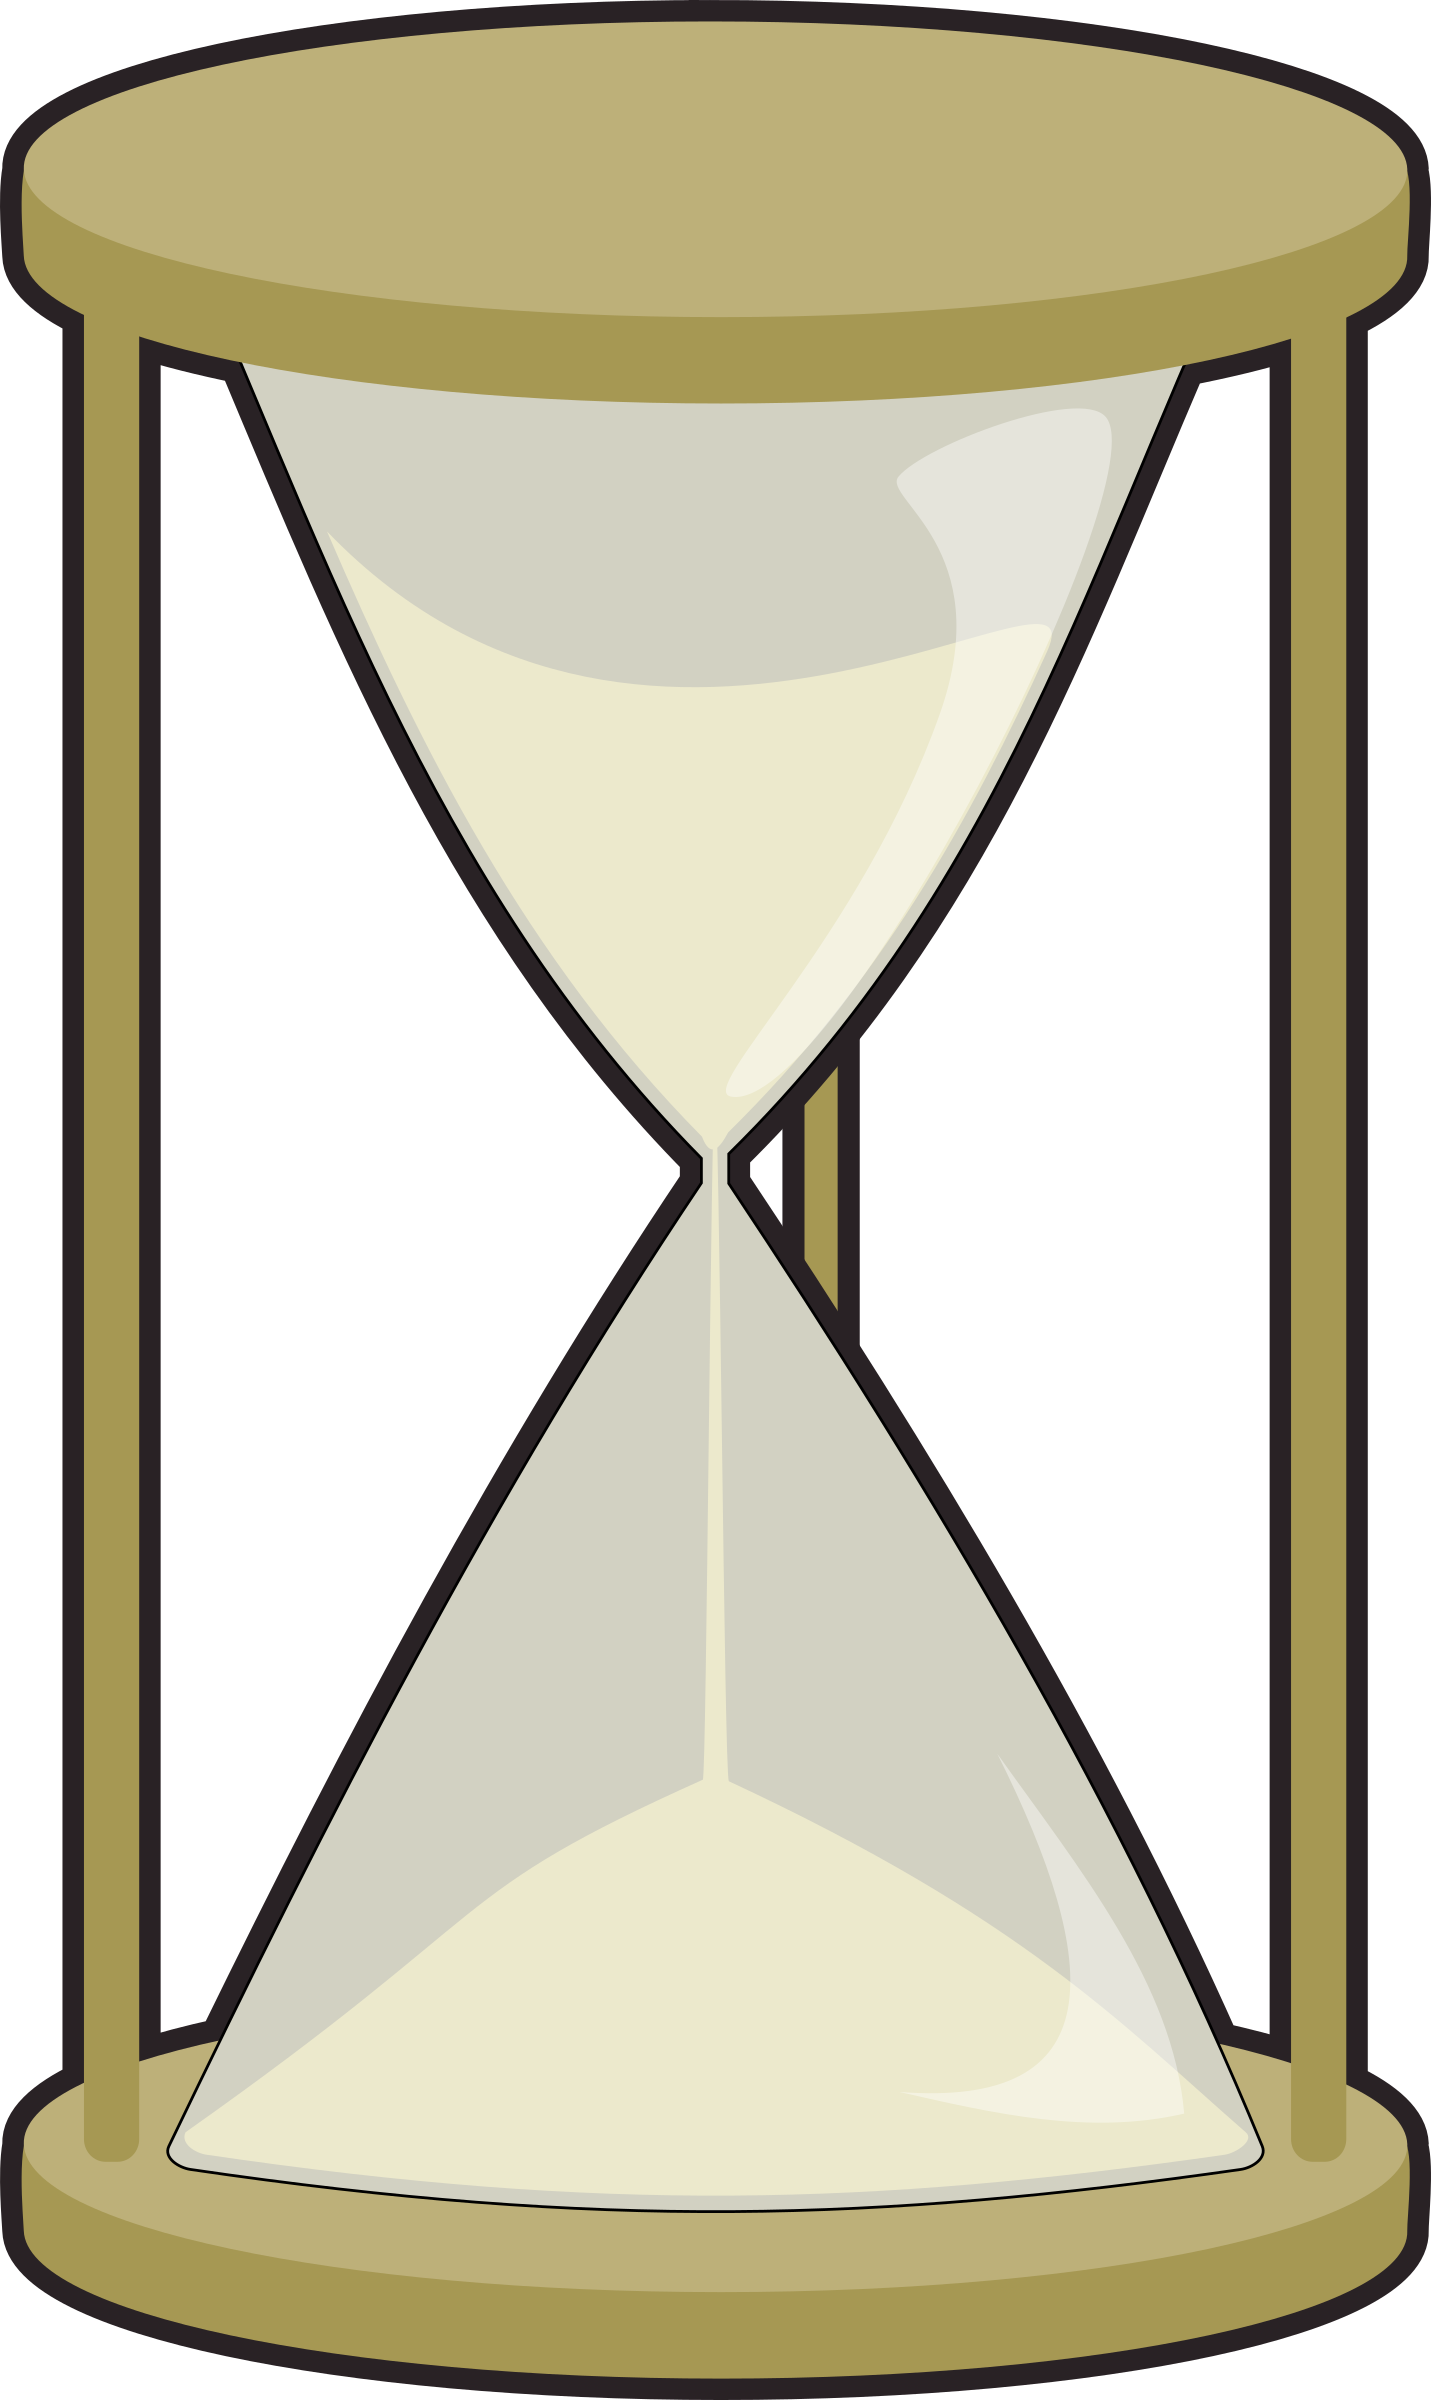 Clipart - Hourglass